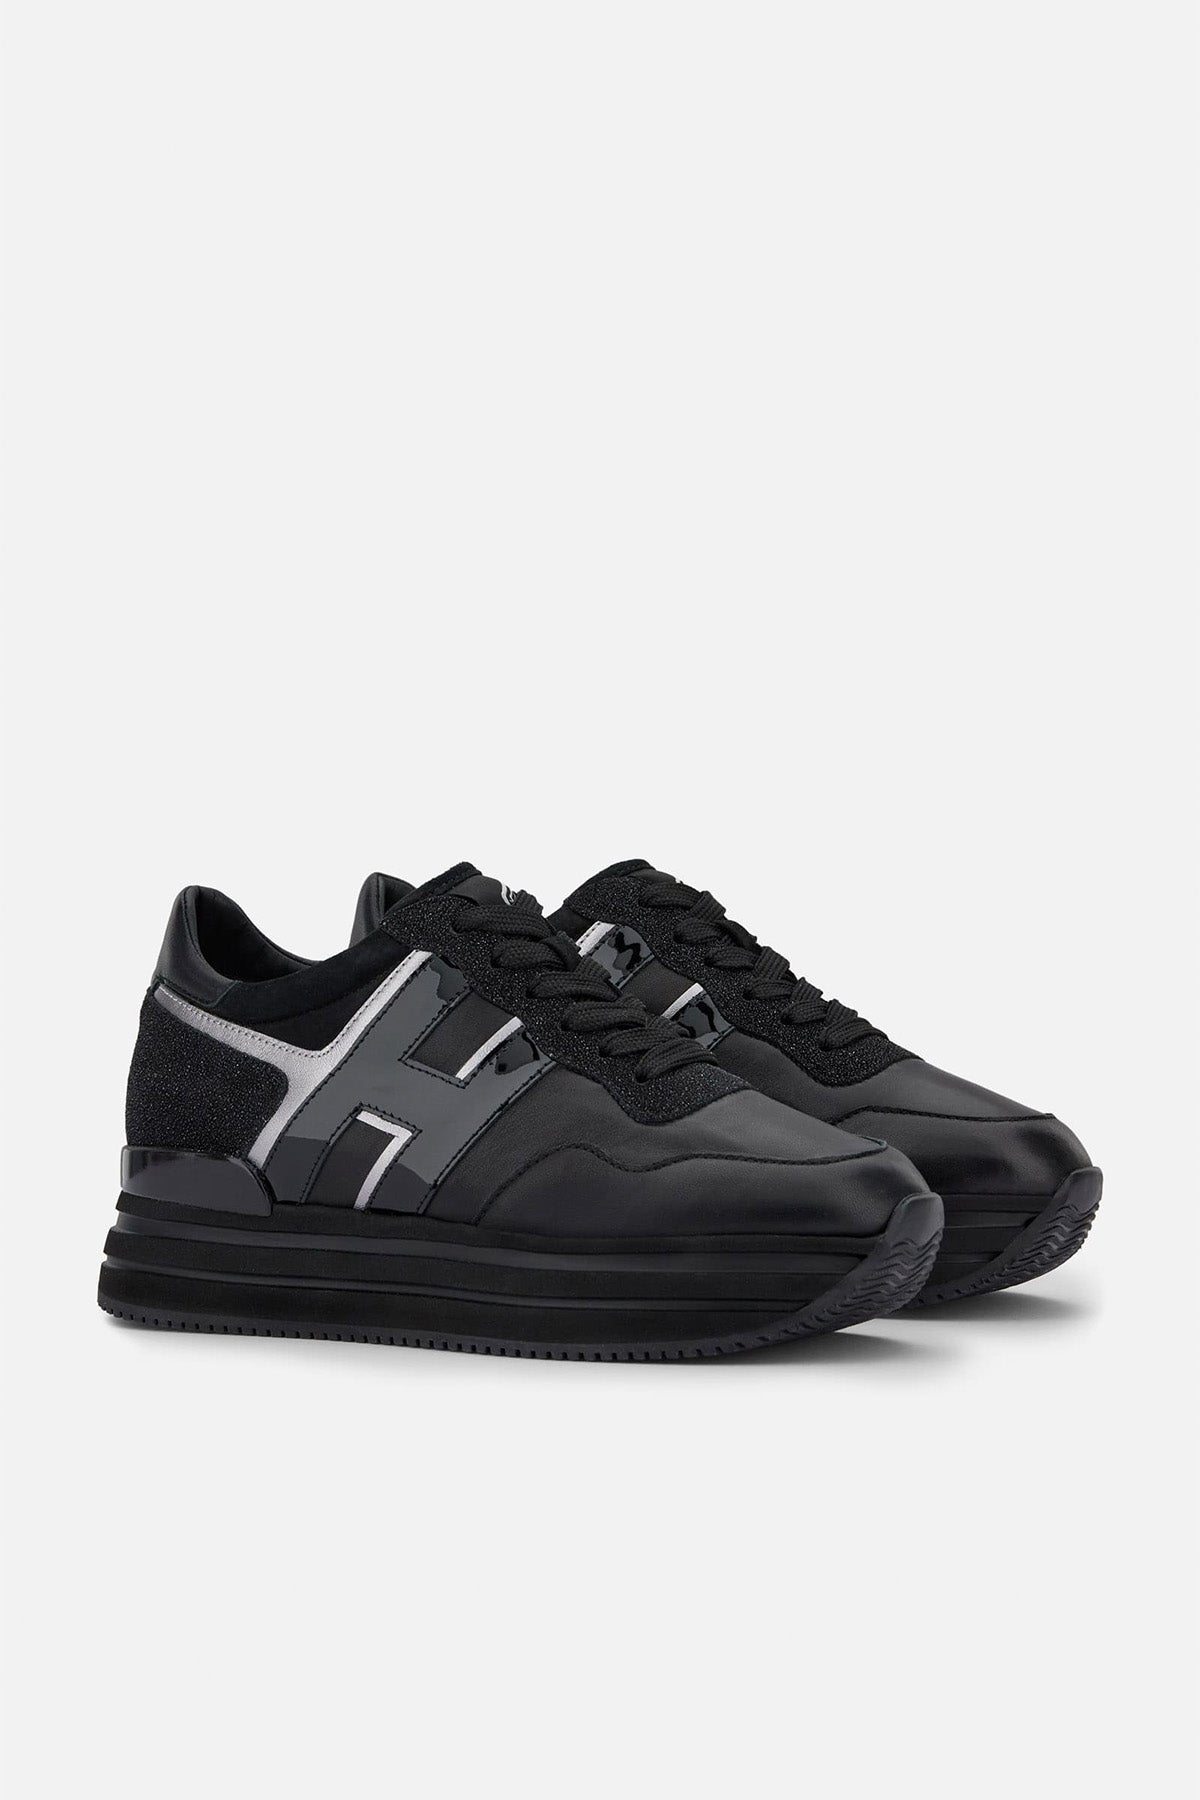 Hogan H483 Midi Platform Deri Sneaker Ayakkabı-Libas Trendy Fashion Store